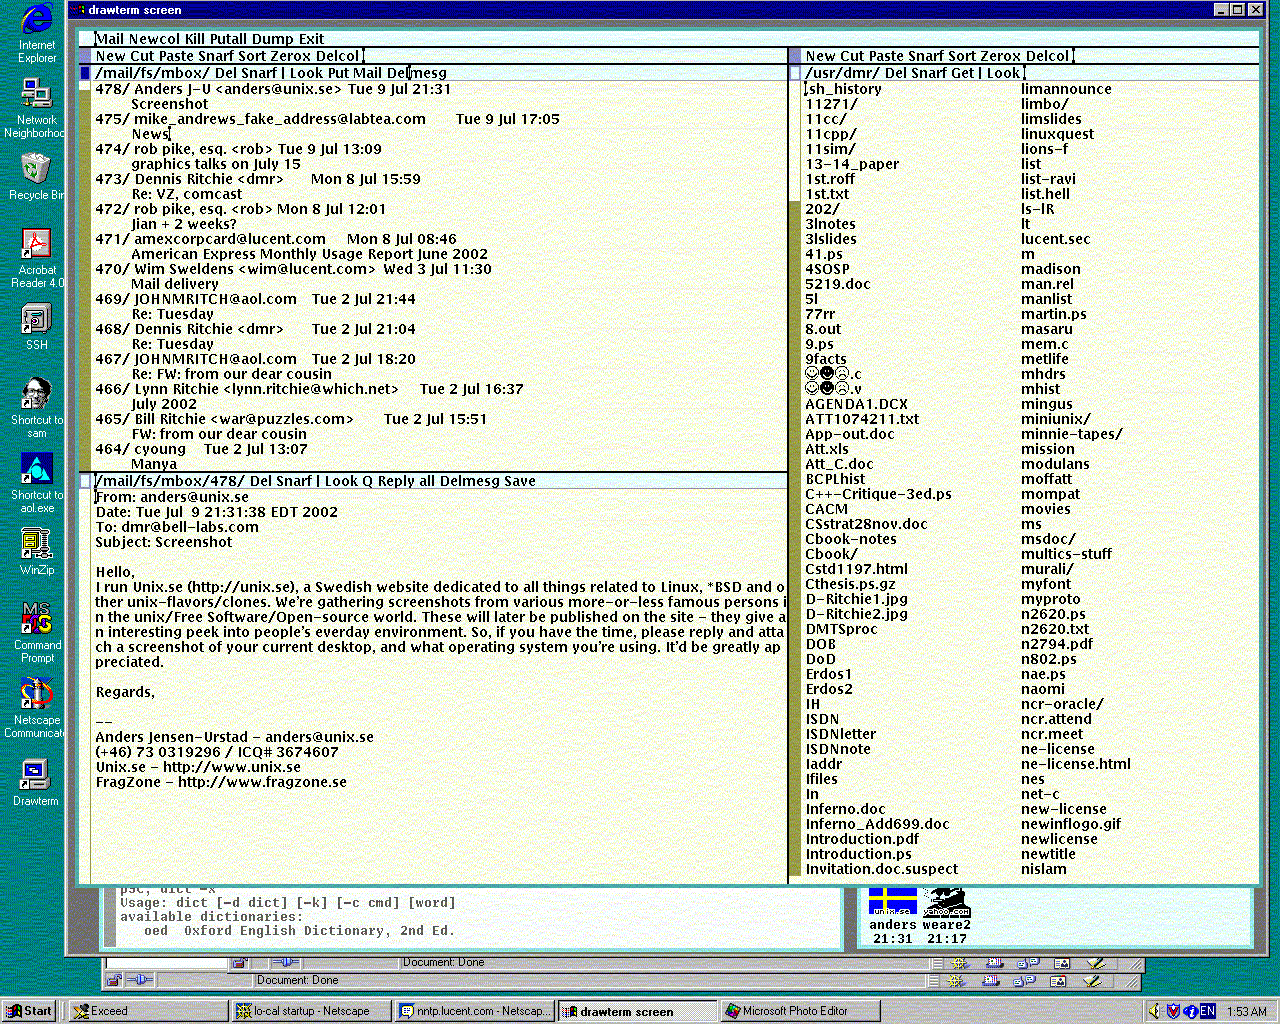 Dennis Ritchie的电脑桌面，截图于2002年7月